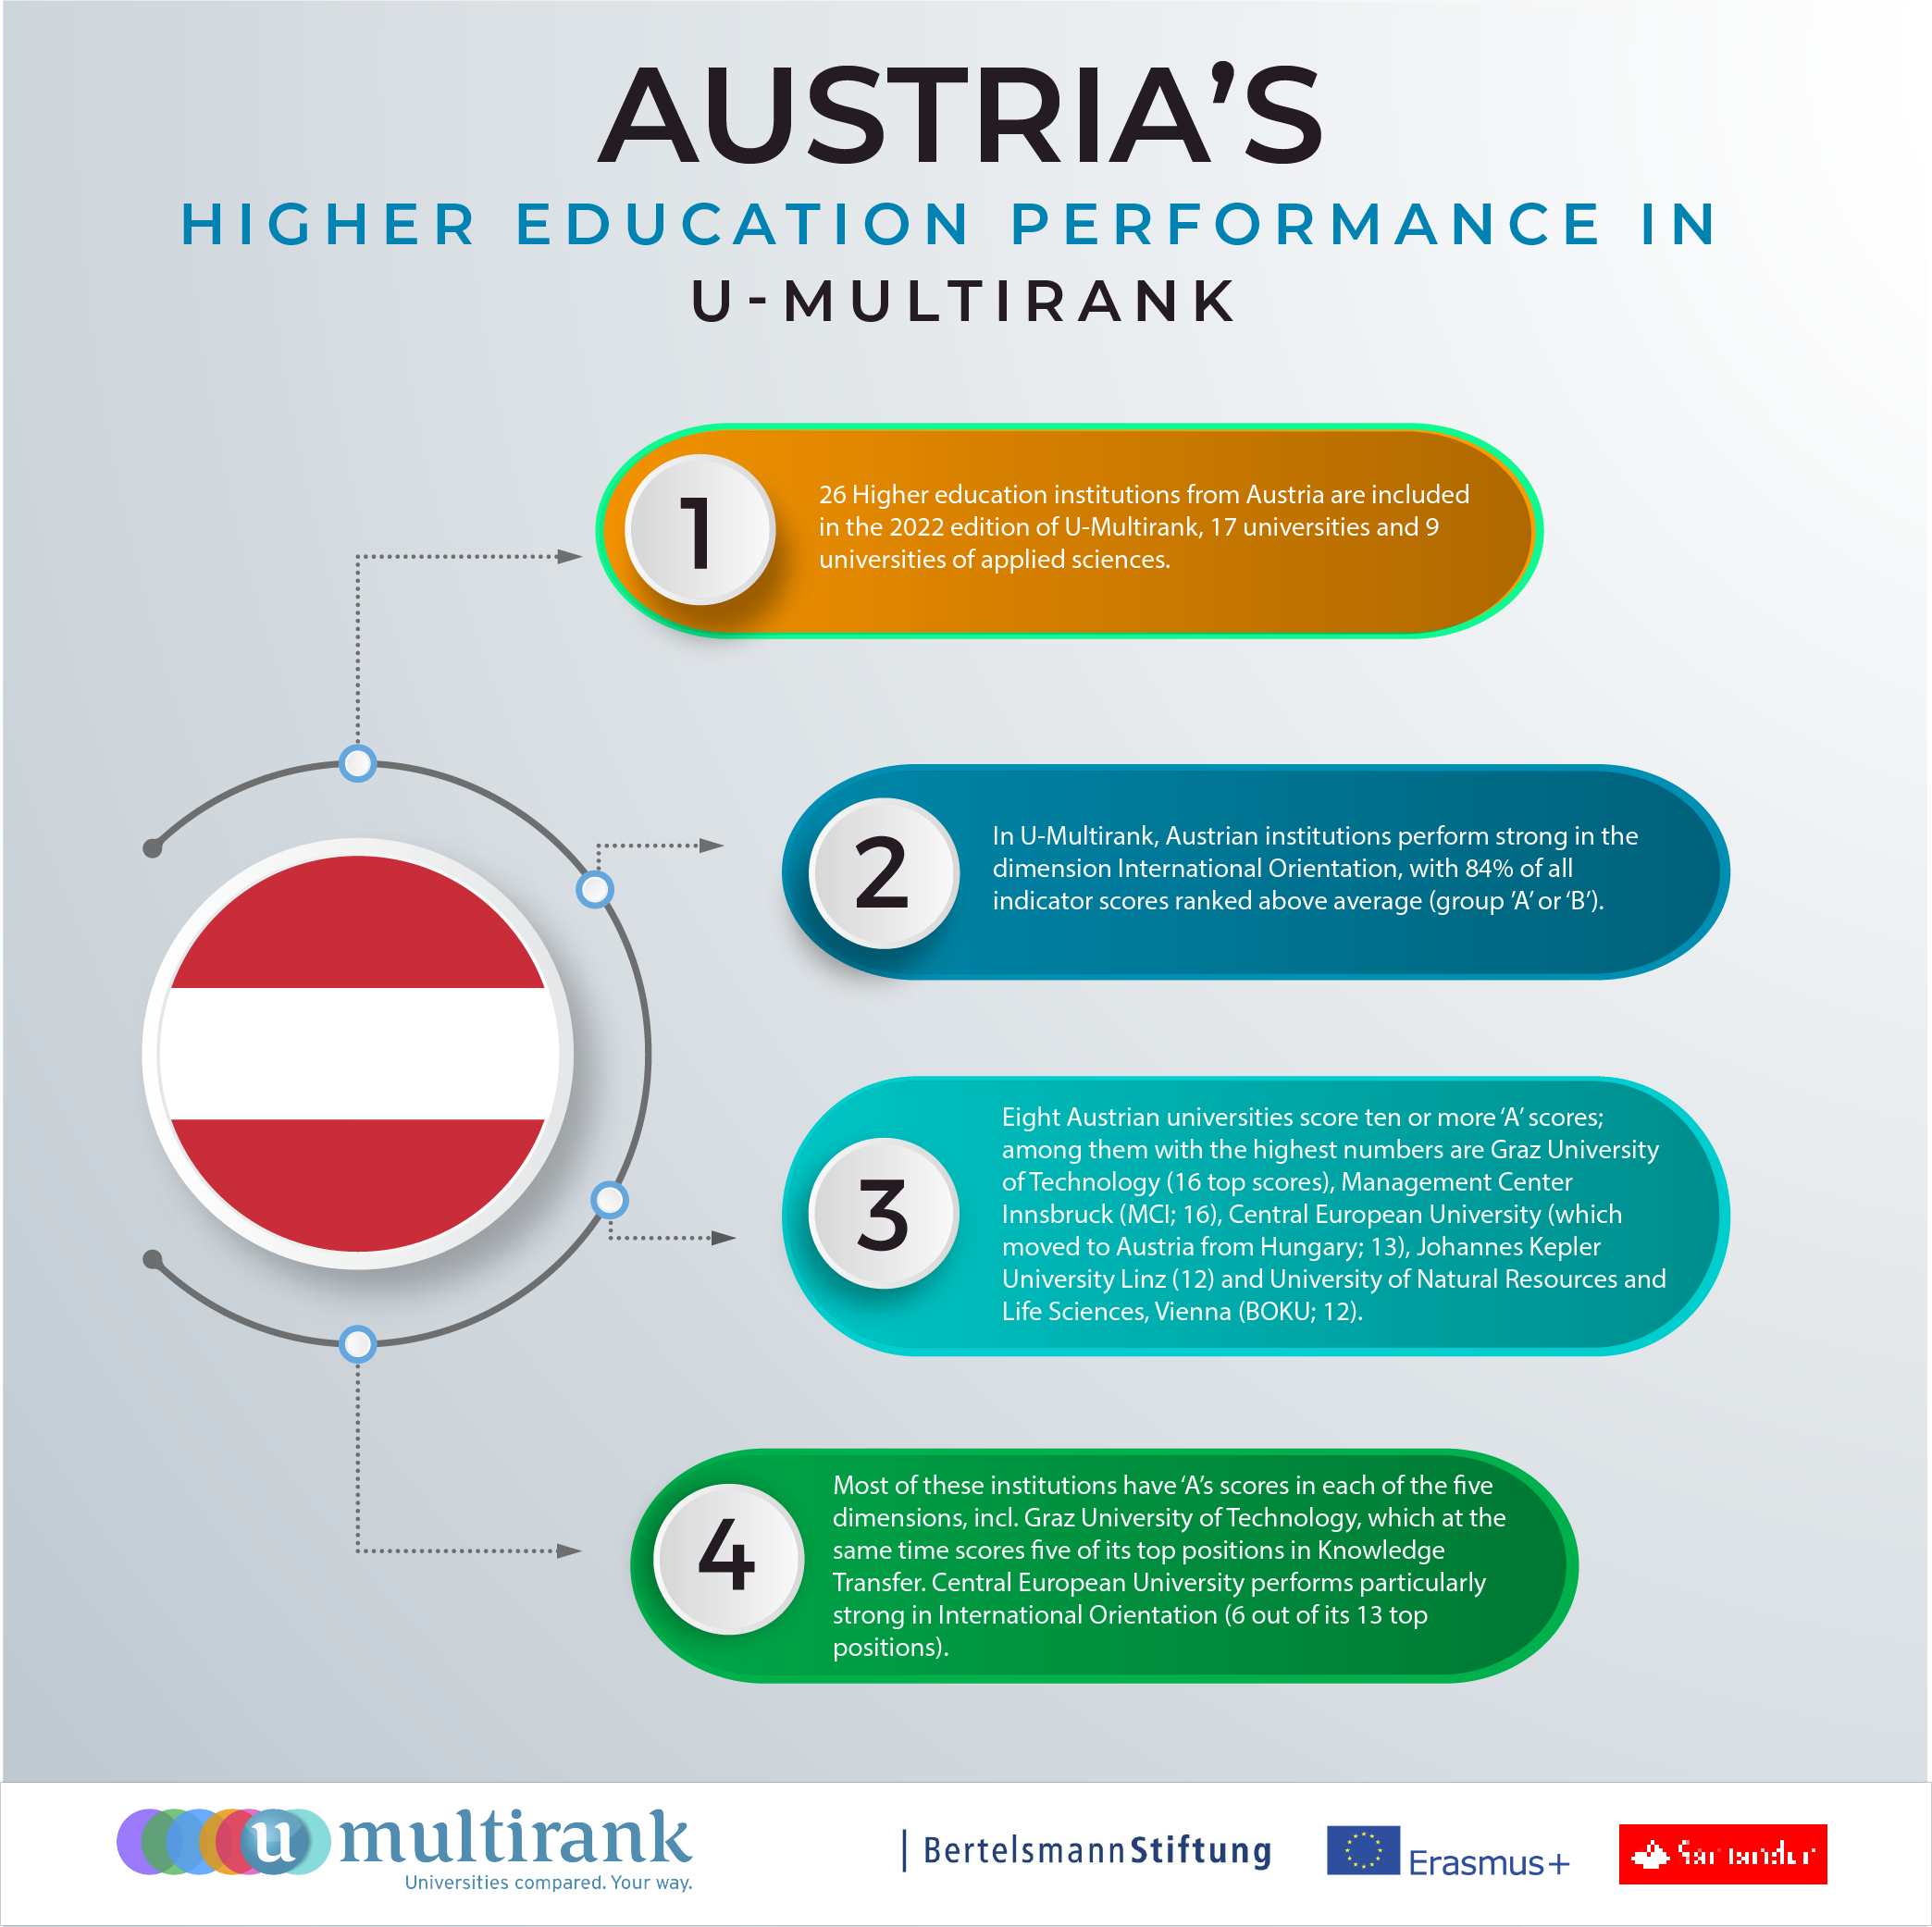 Austria's Higher Education Performance in U-Multirank